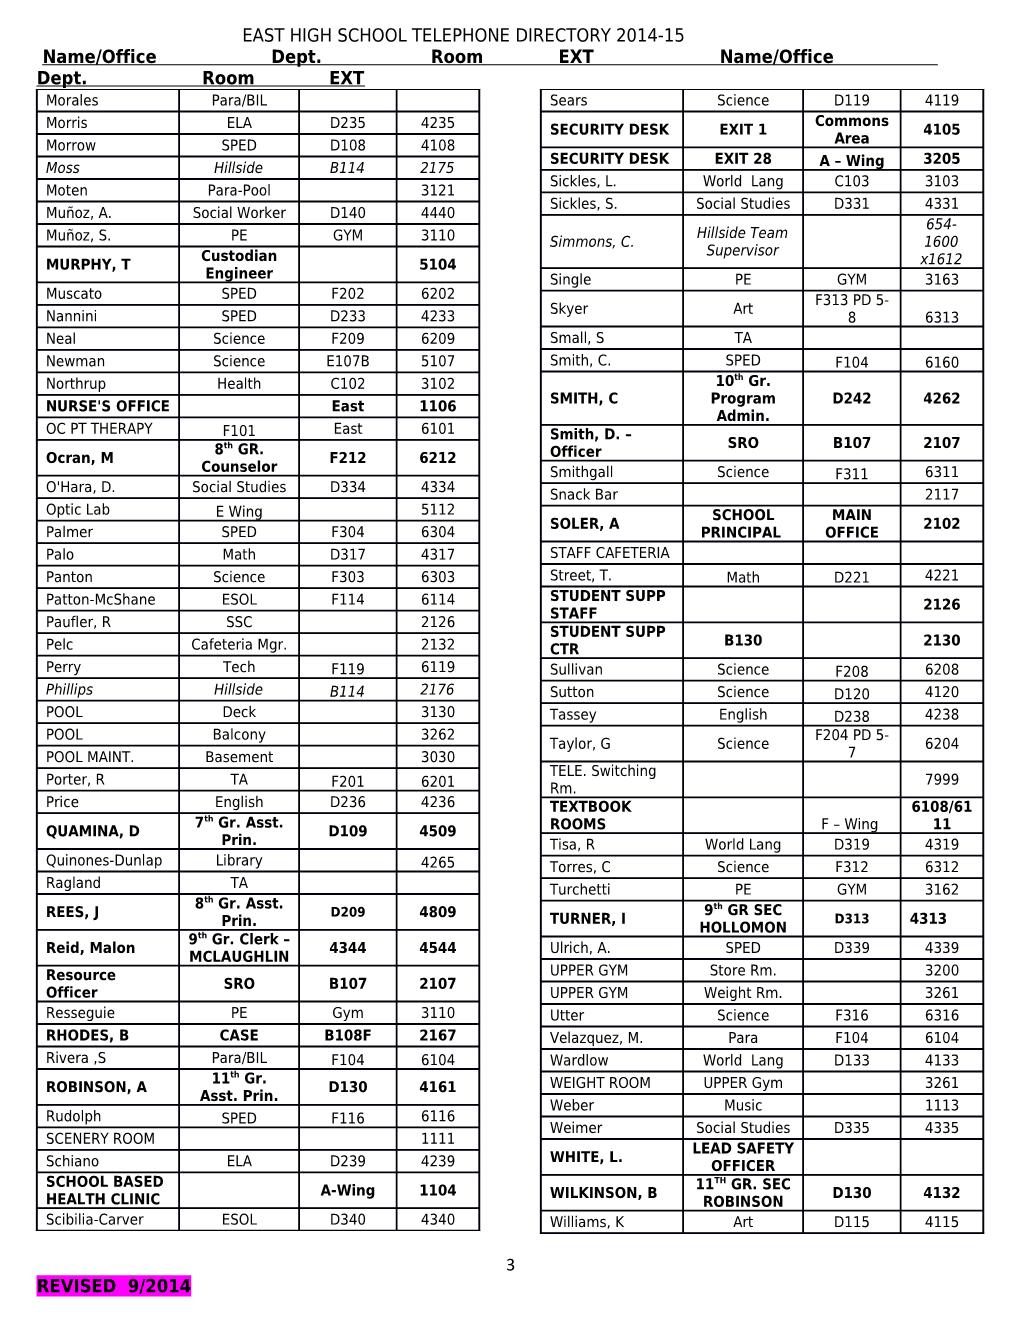 East High School Telephone Directory 2014-15